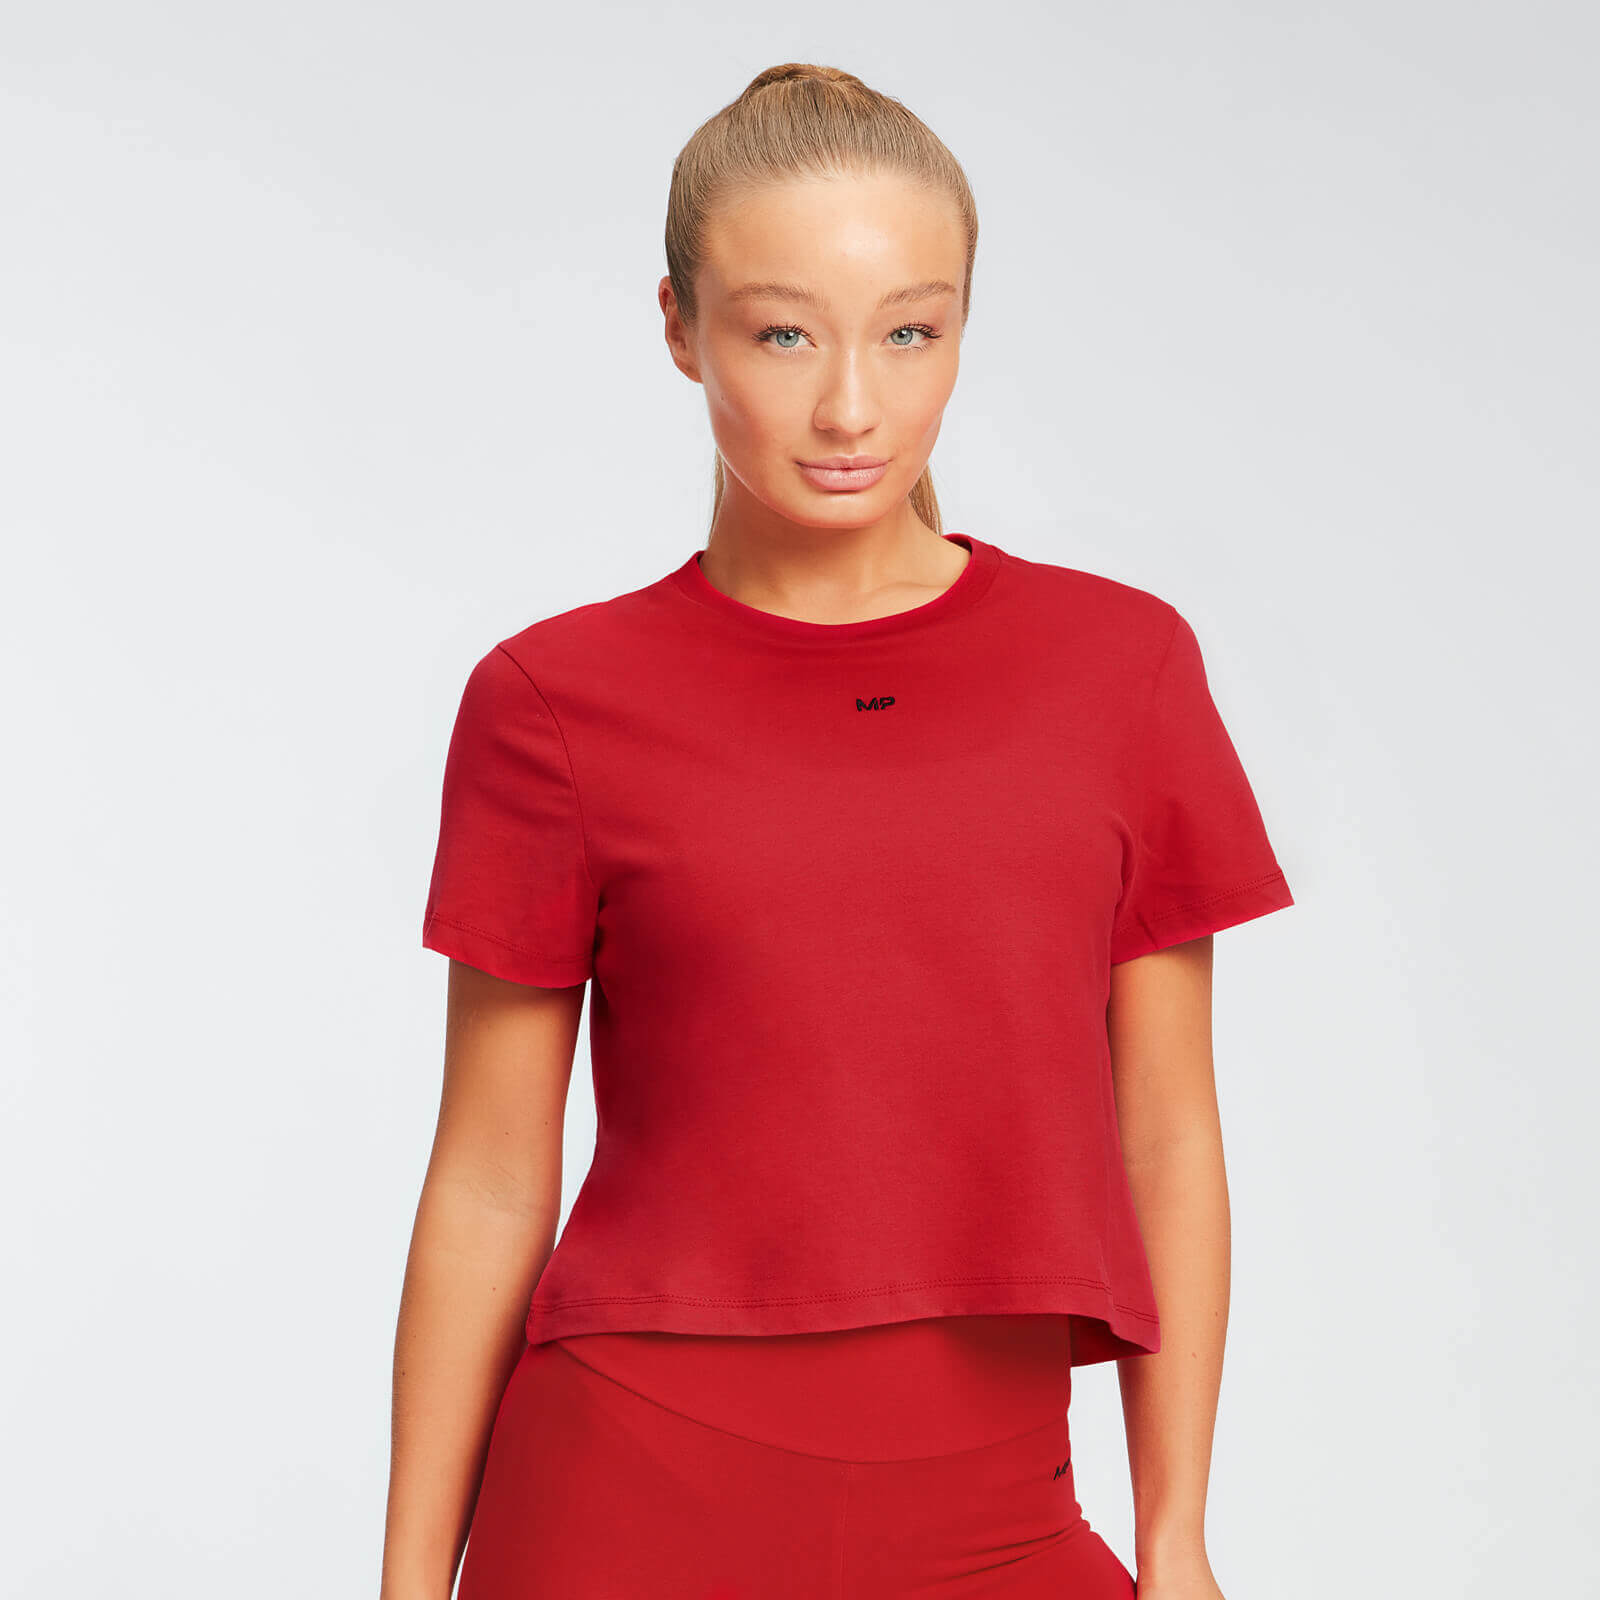 Camiseta corta Essentials para mujer de MP - Rojo - M